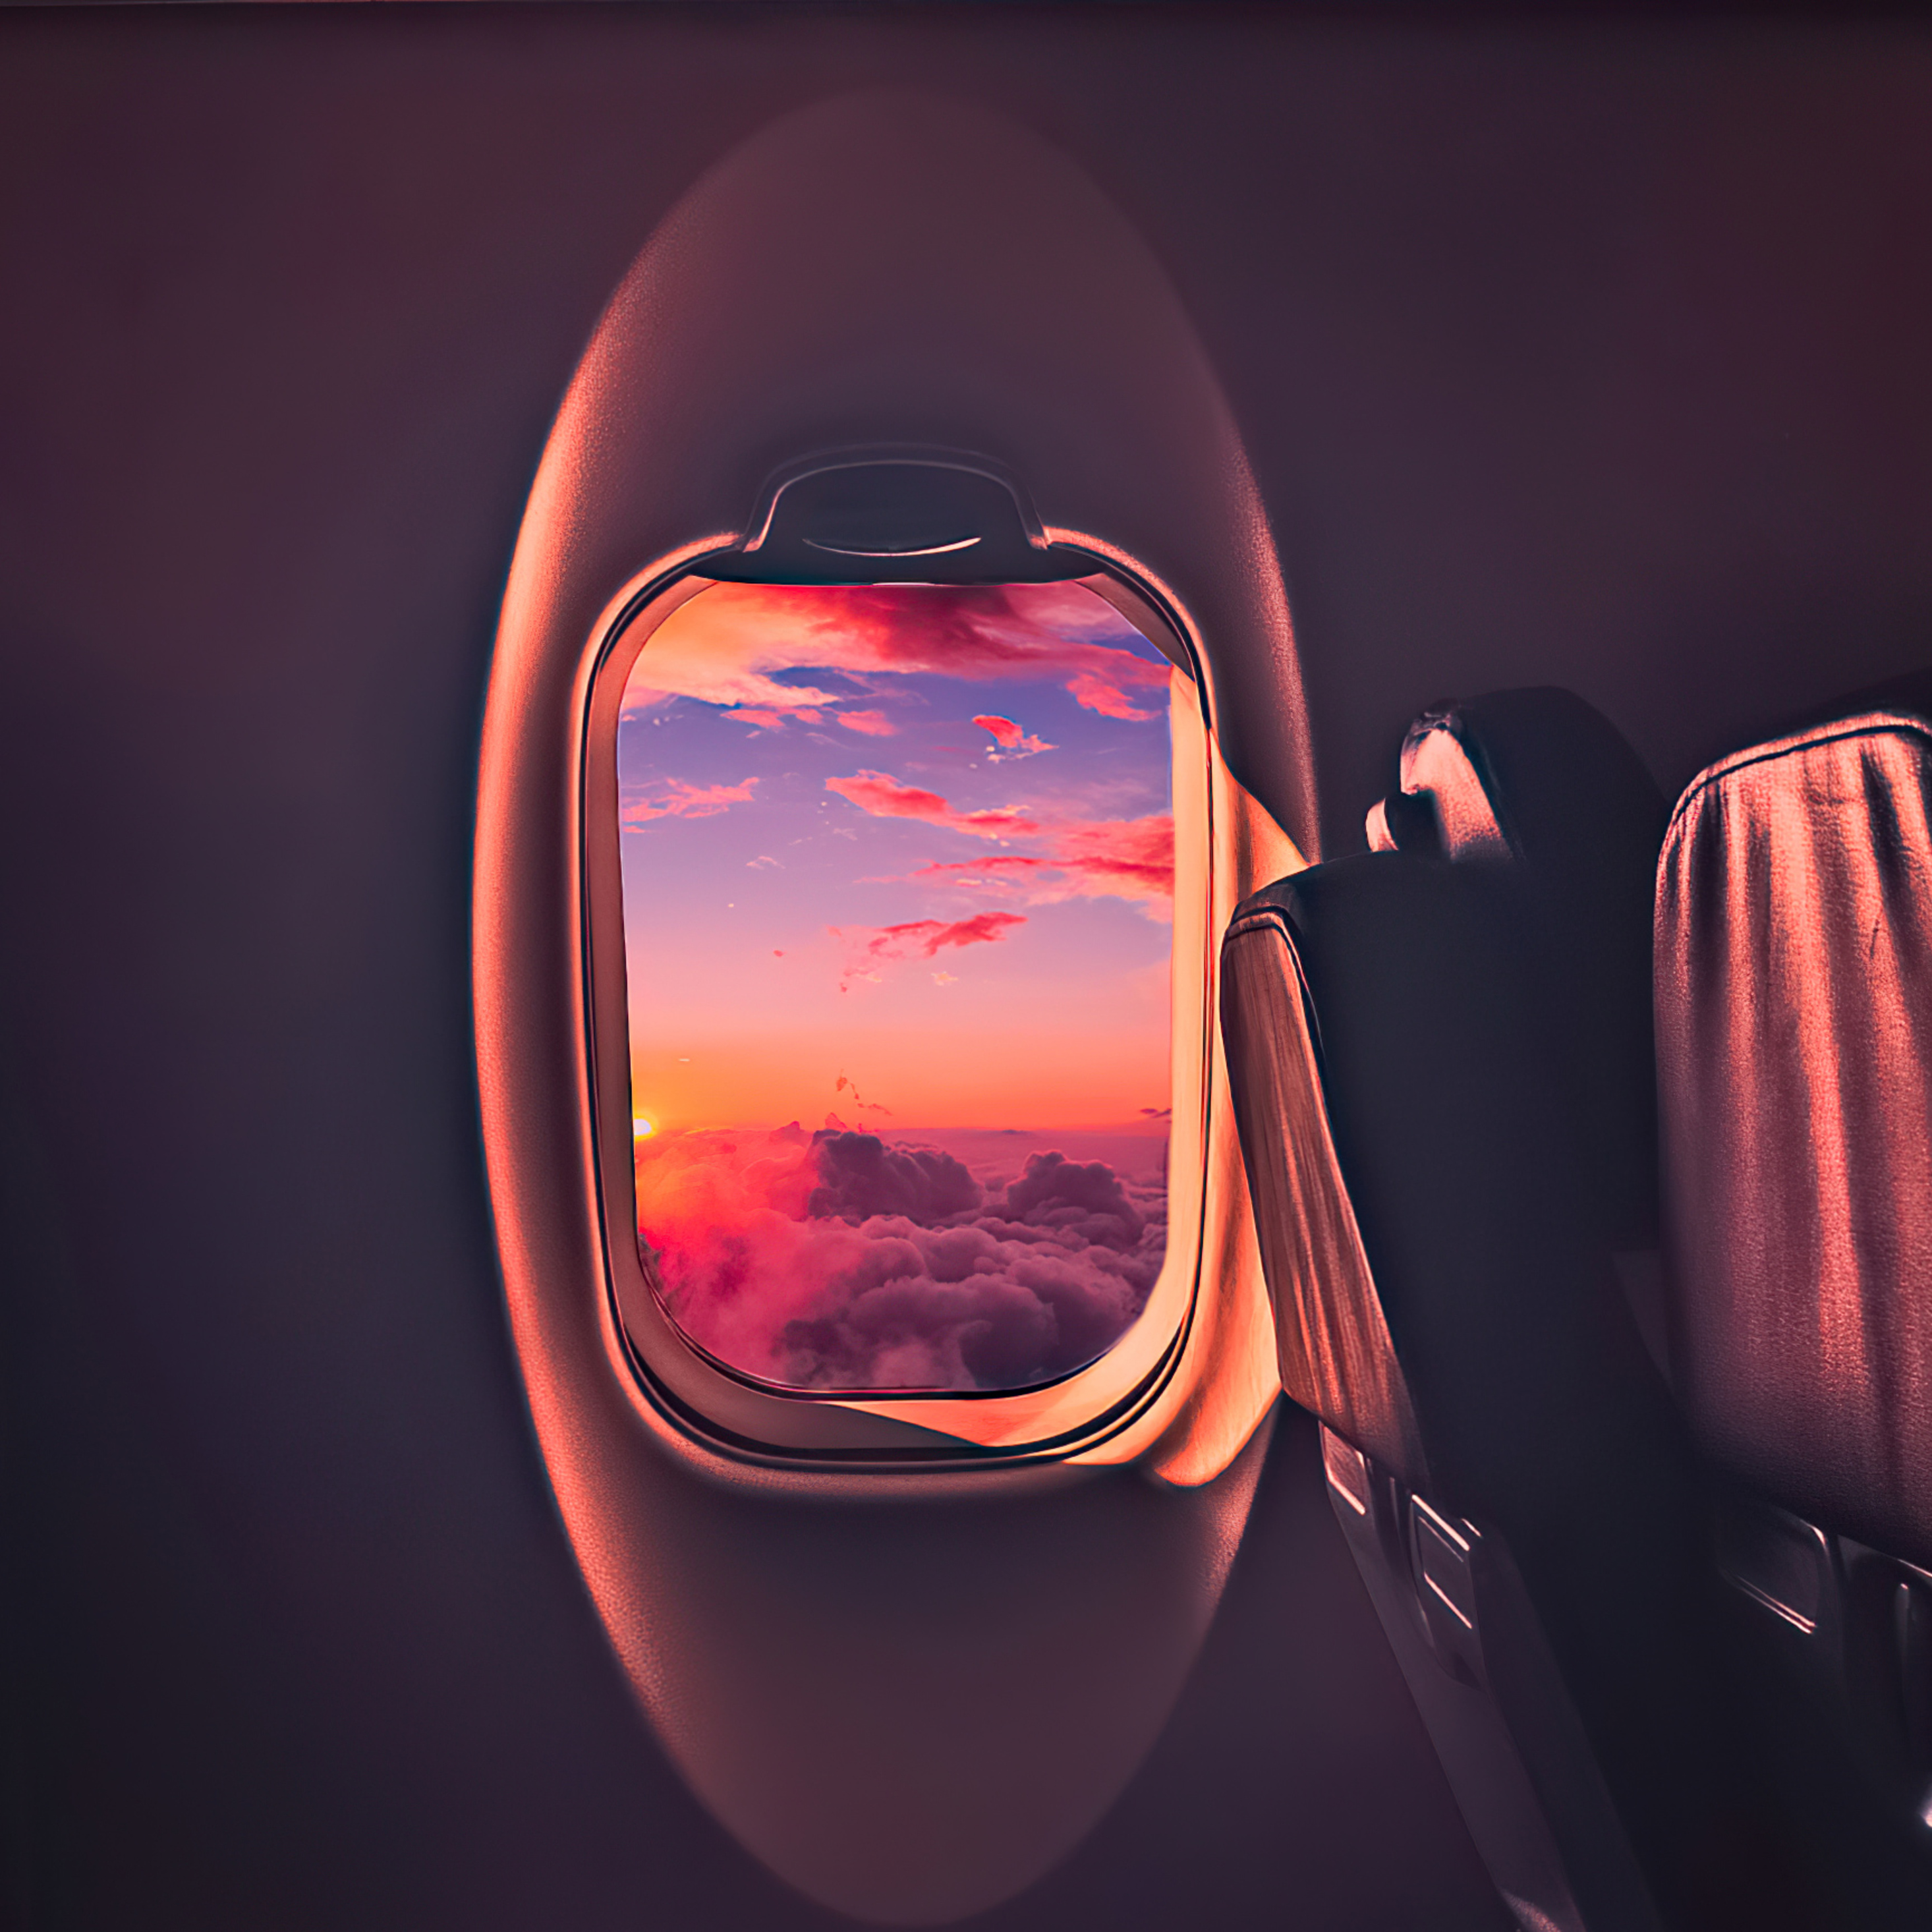 Beautiful Sunset Through Airplane Window iPad Pro Retina Display HD 4k Wallpaper, Image, Background, Photo and Picture